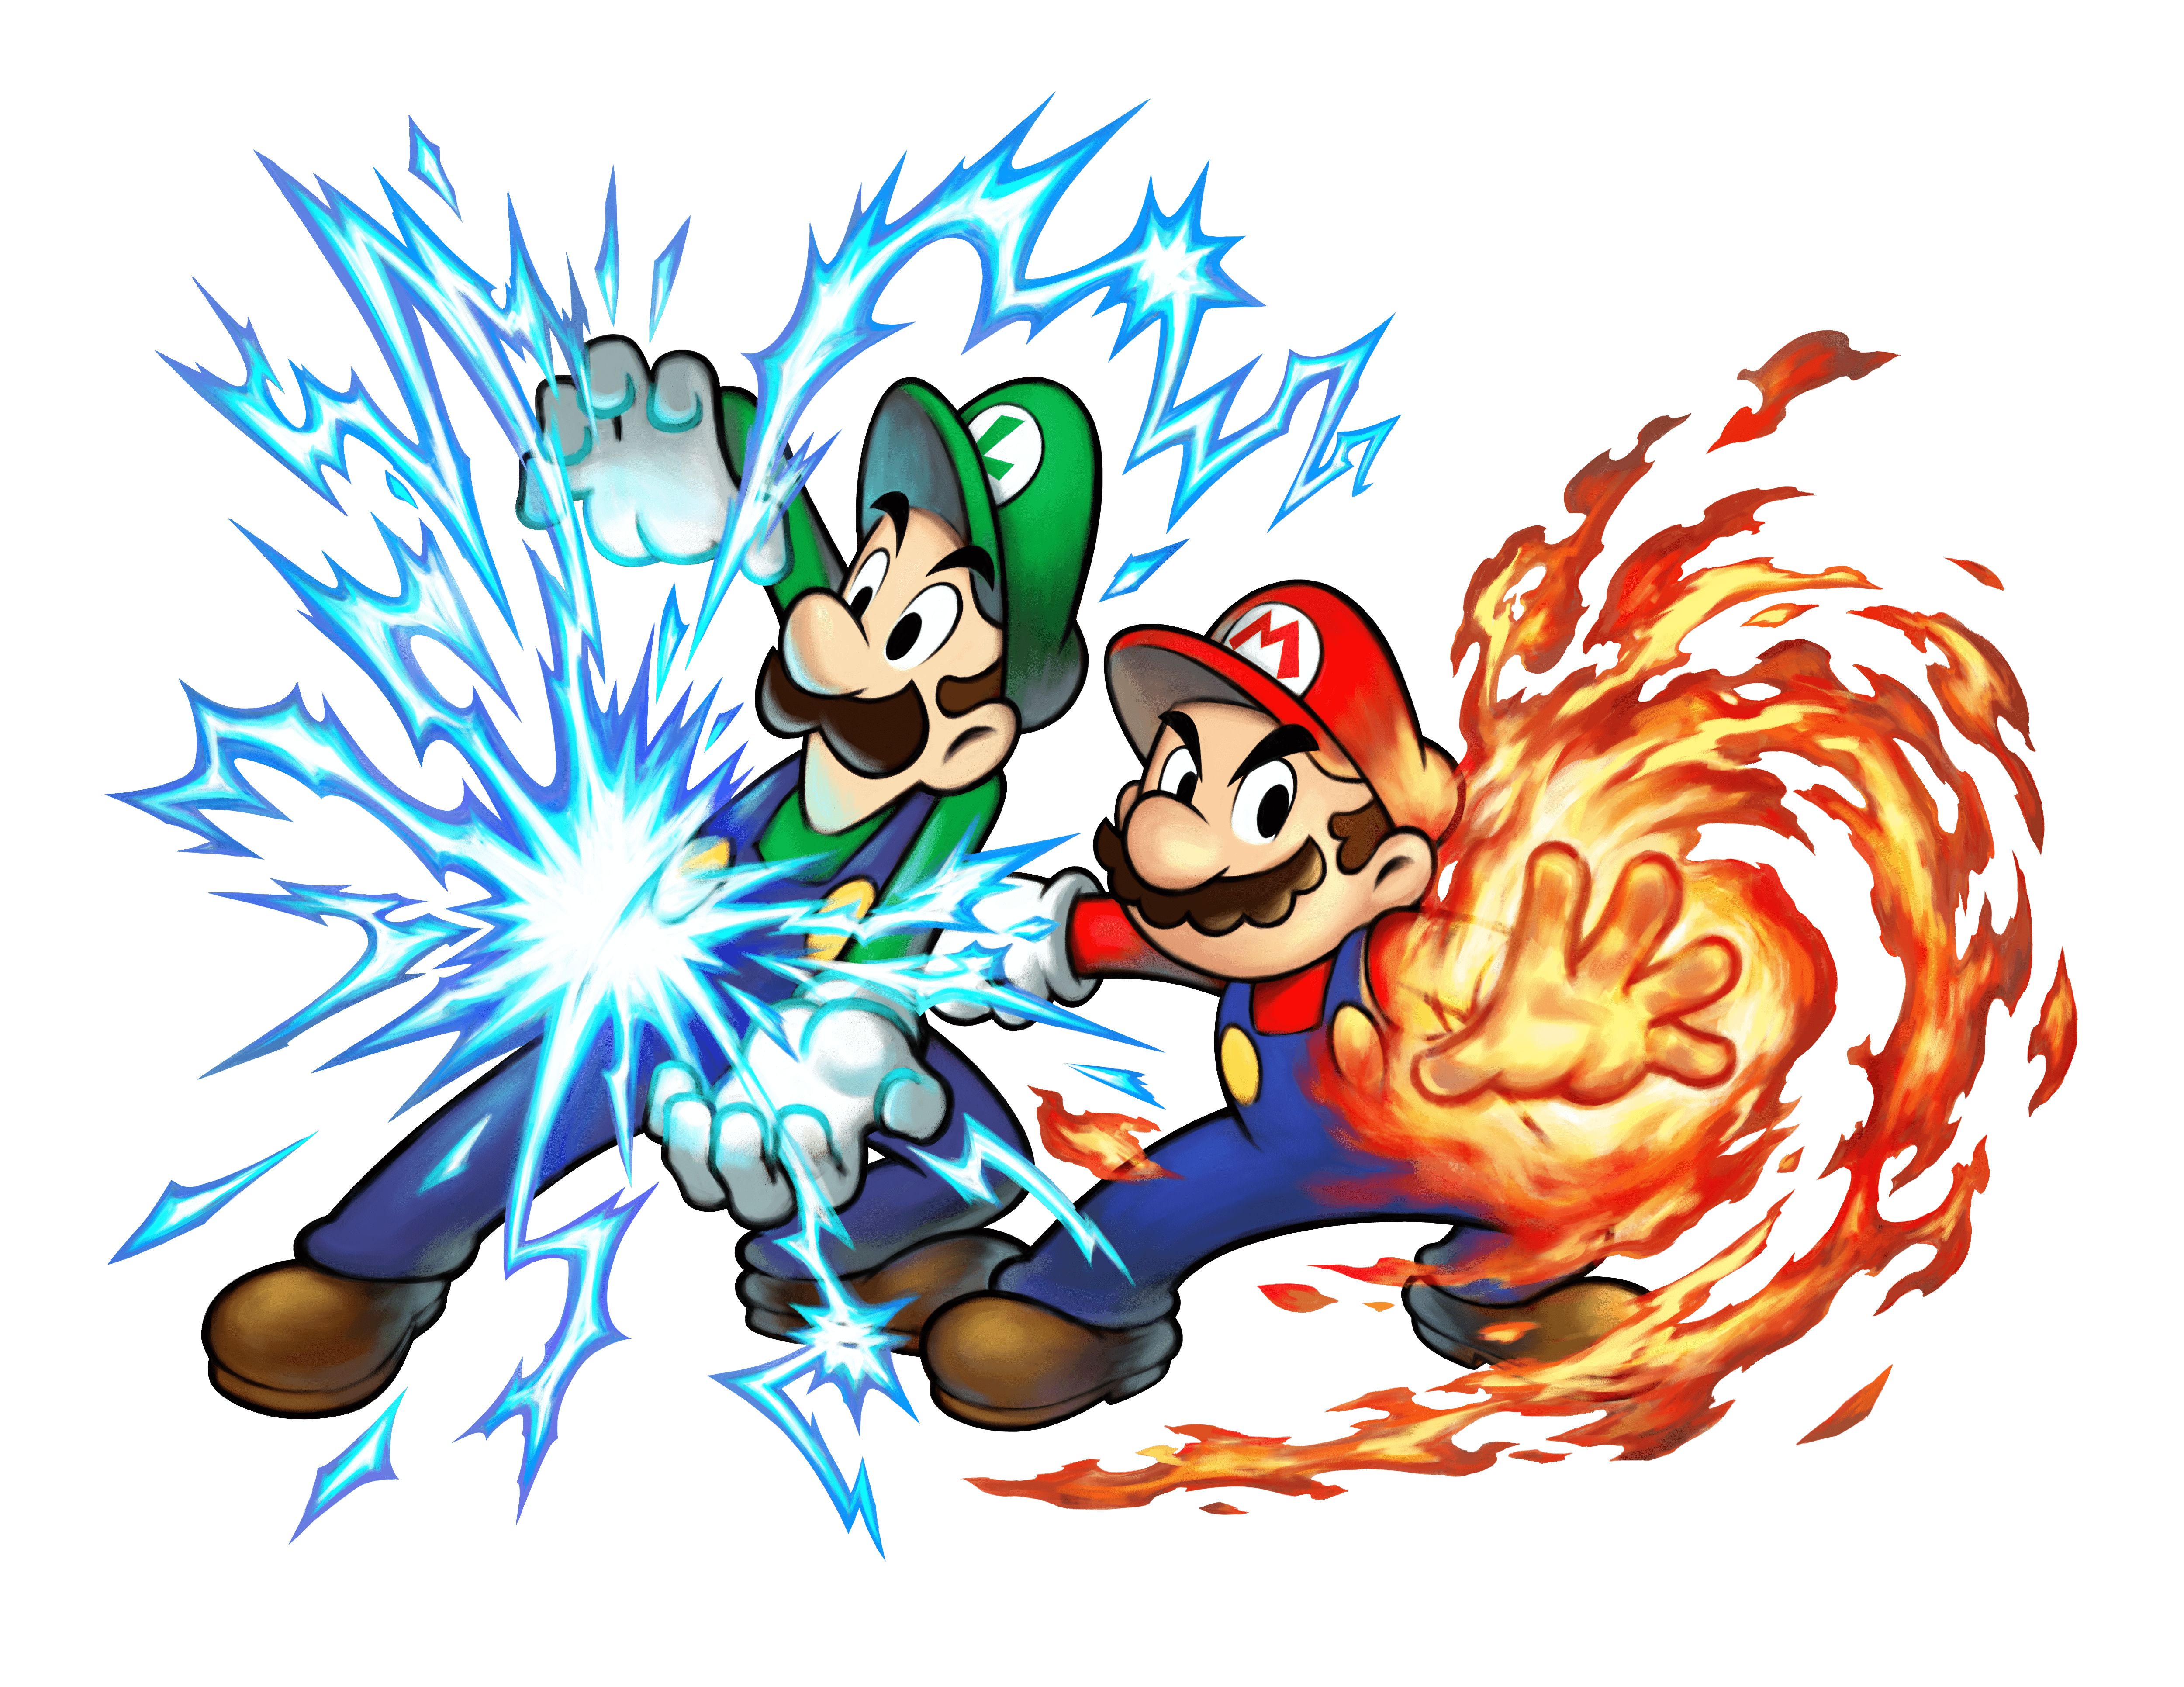 Mario and Luigi using the Firebrand and Thunderhand respectively in Mario & Luigi: Superstar Saga + Bowser's Minions.